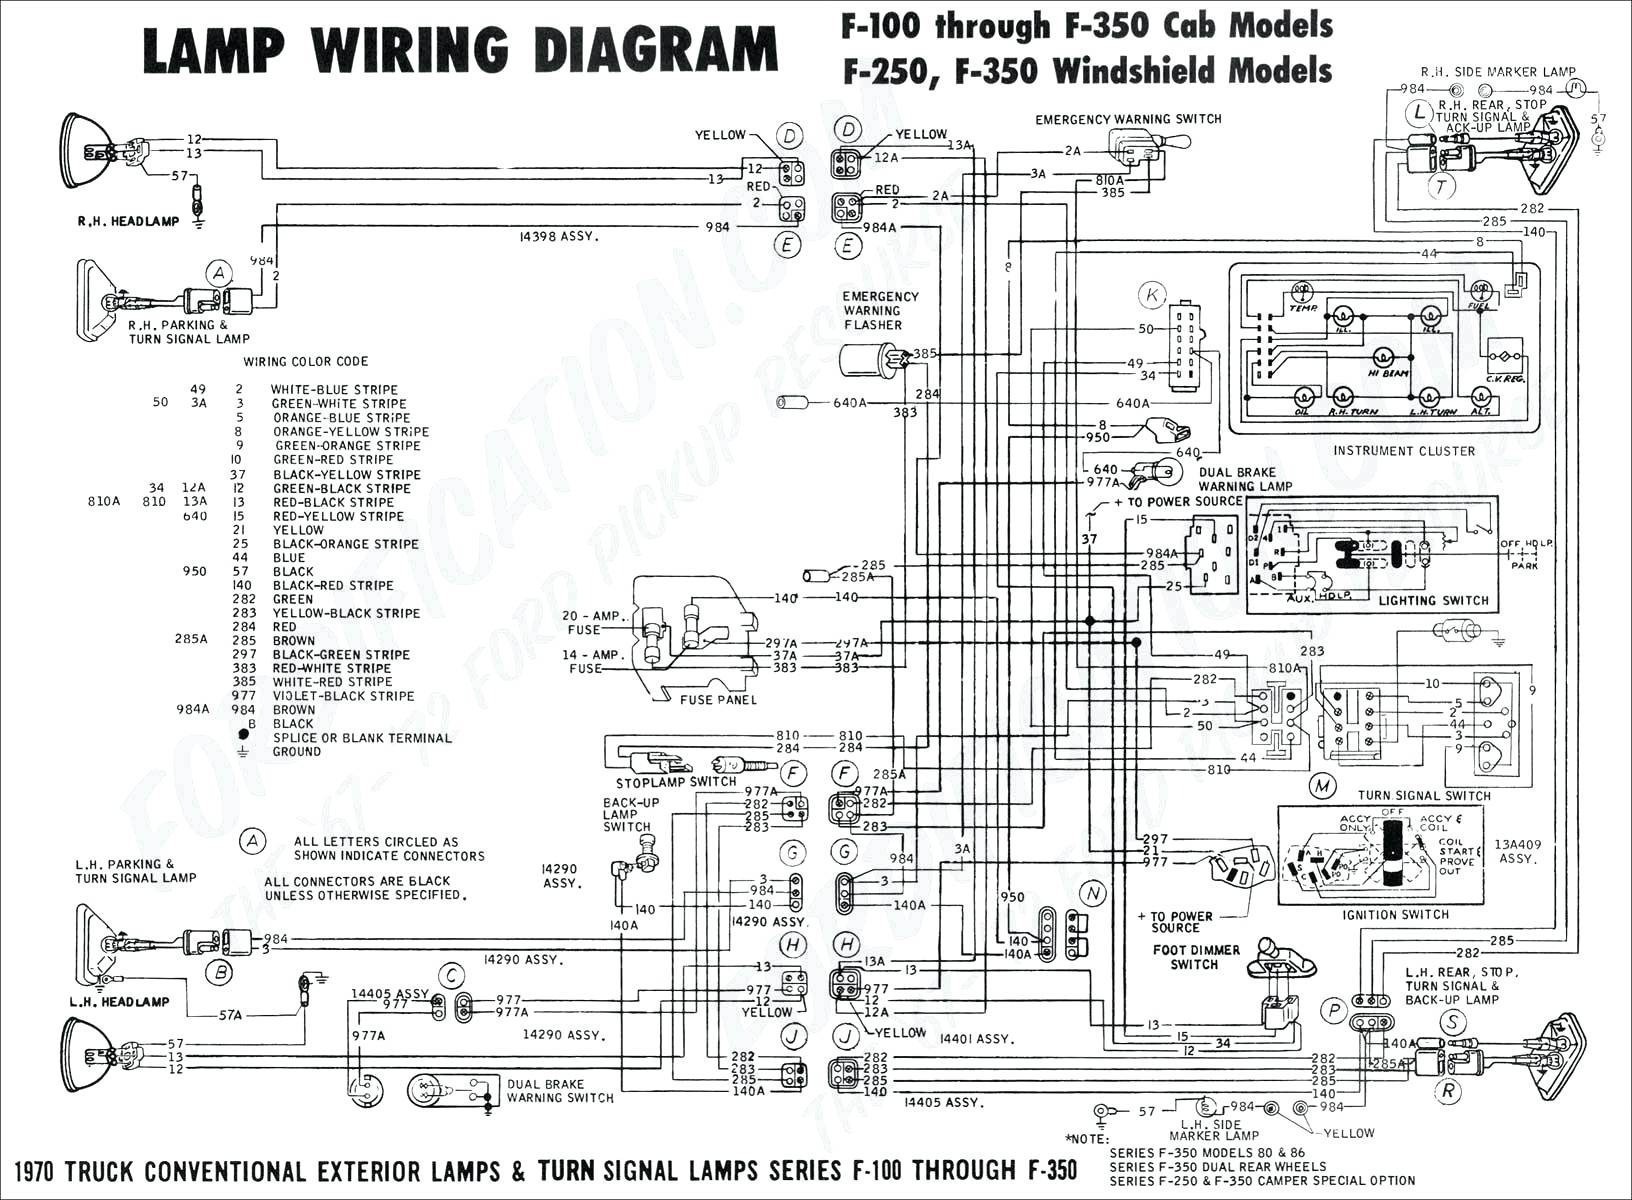 Vehicle Trailer Wiring Diagram Trailer Wiring Diagram New Zealand Fresh Wiring Diagram for Car Trailer